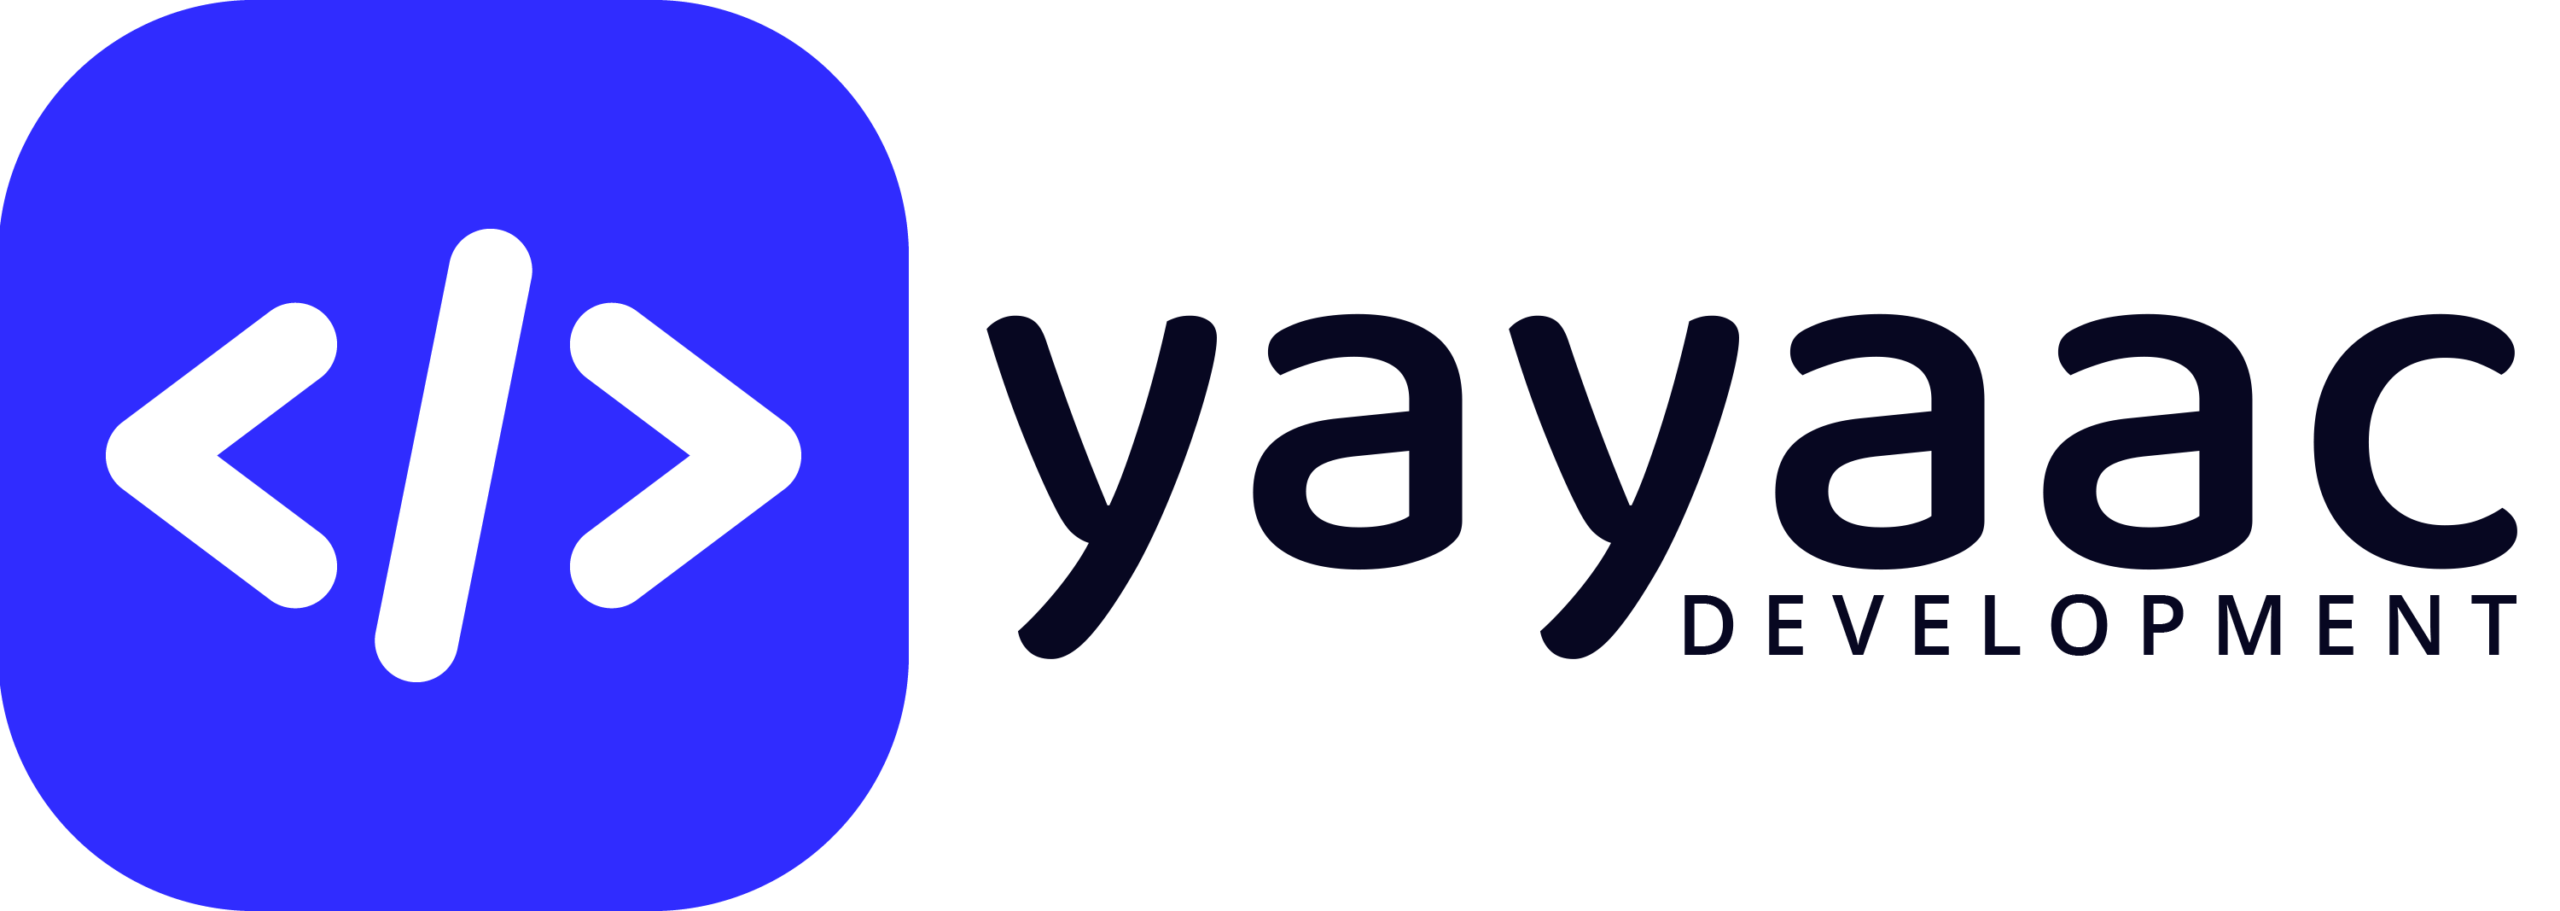 Yayaac | Agence no code